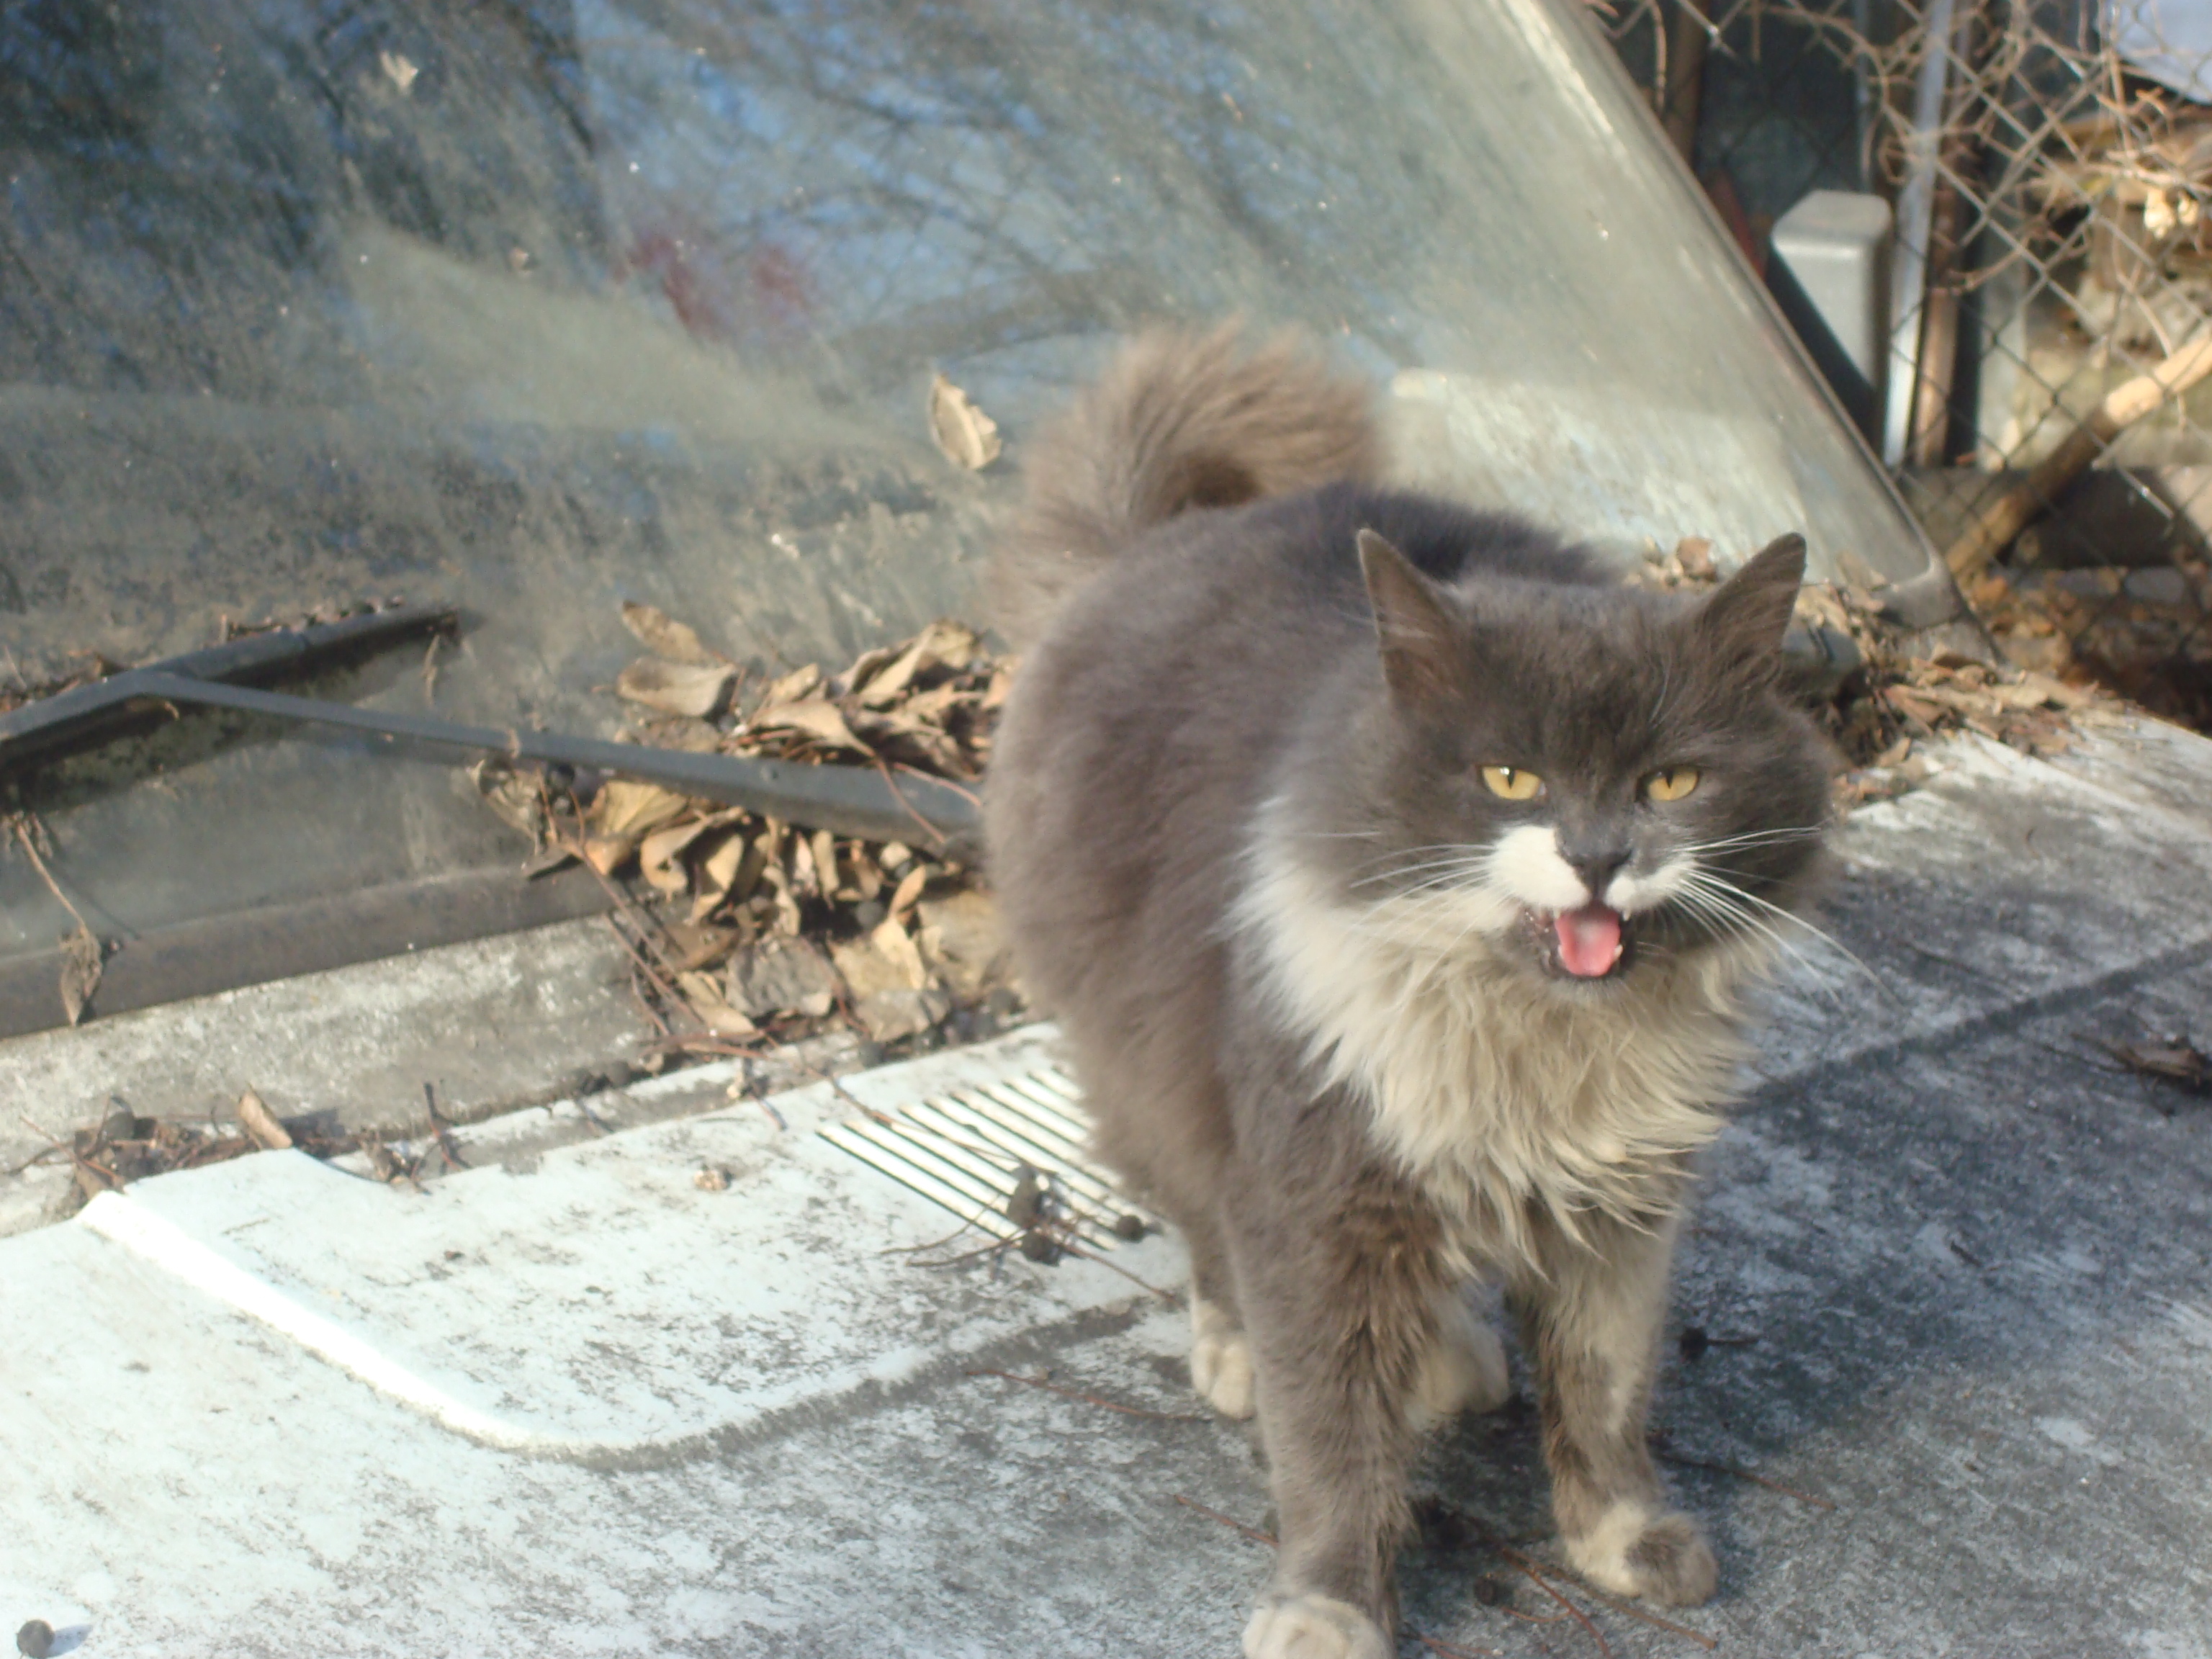 Street cat photo